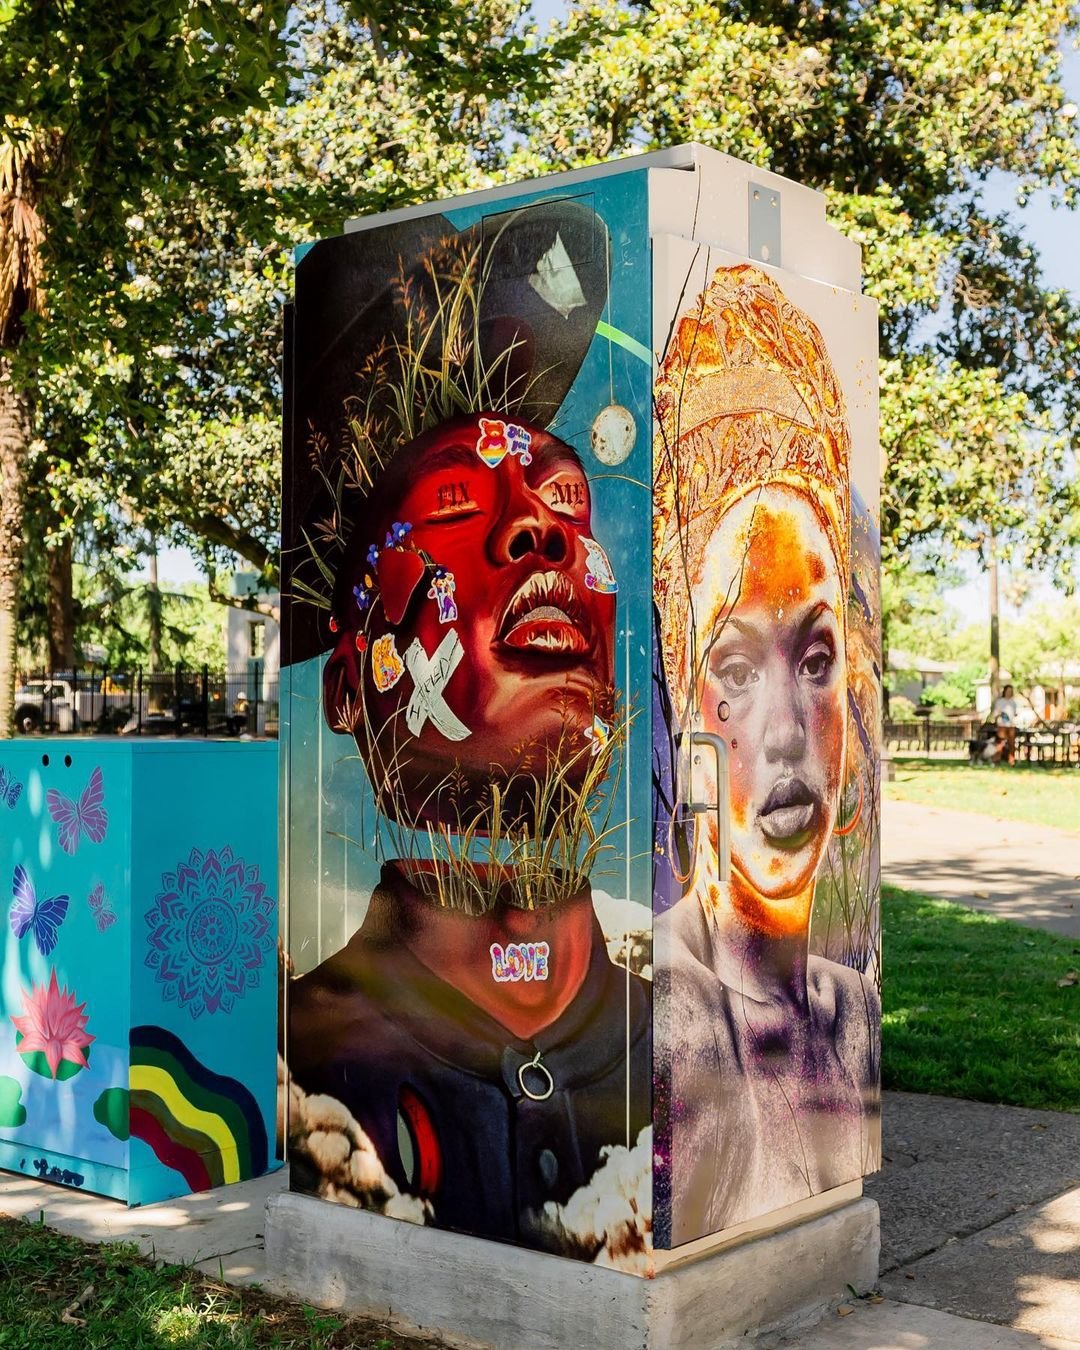 Street-Art-on-Electrical-boxes-by-Brandon-Gastinell-Winn-Park-in-Sacramento-California-3-Photo-by-xsession-5.jpg